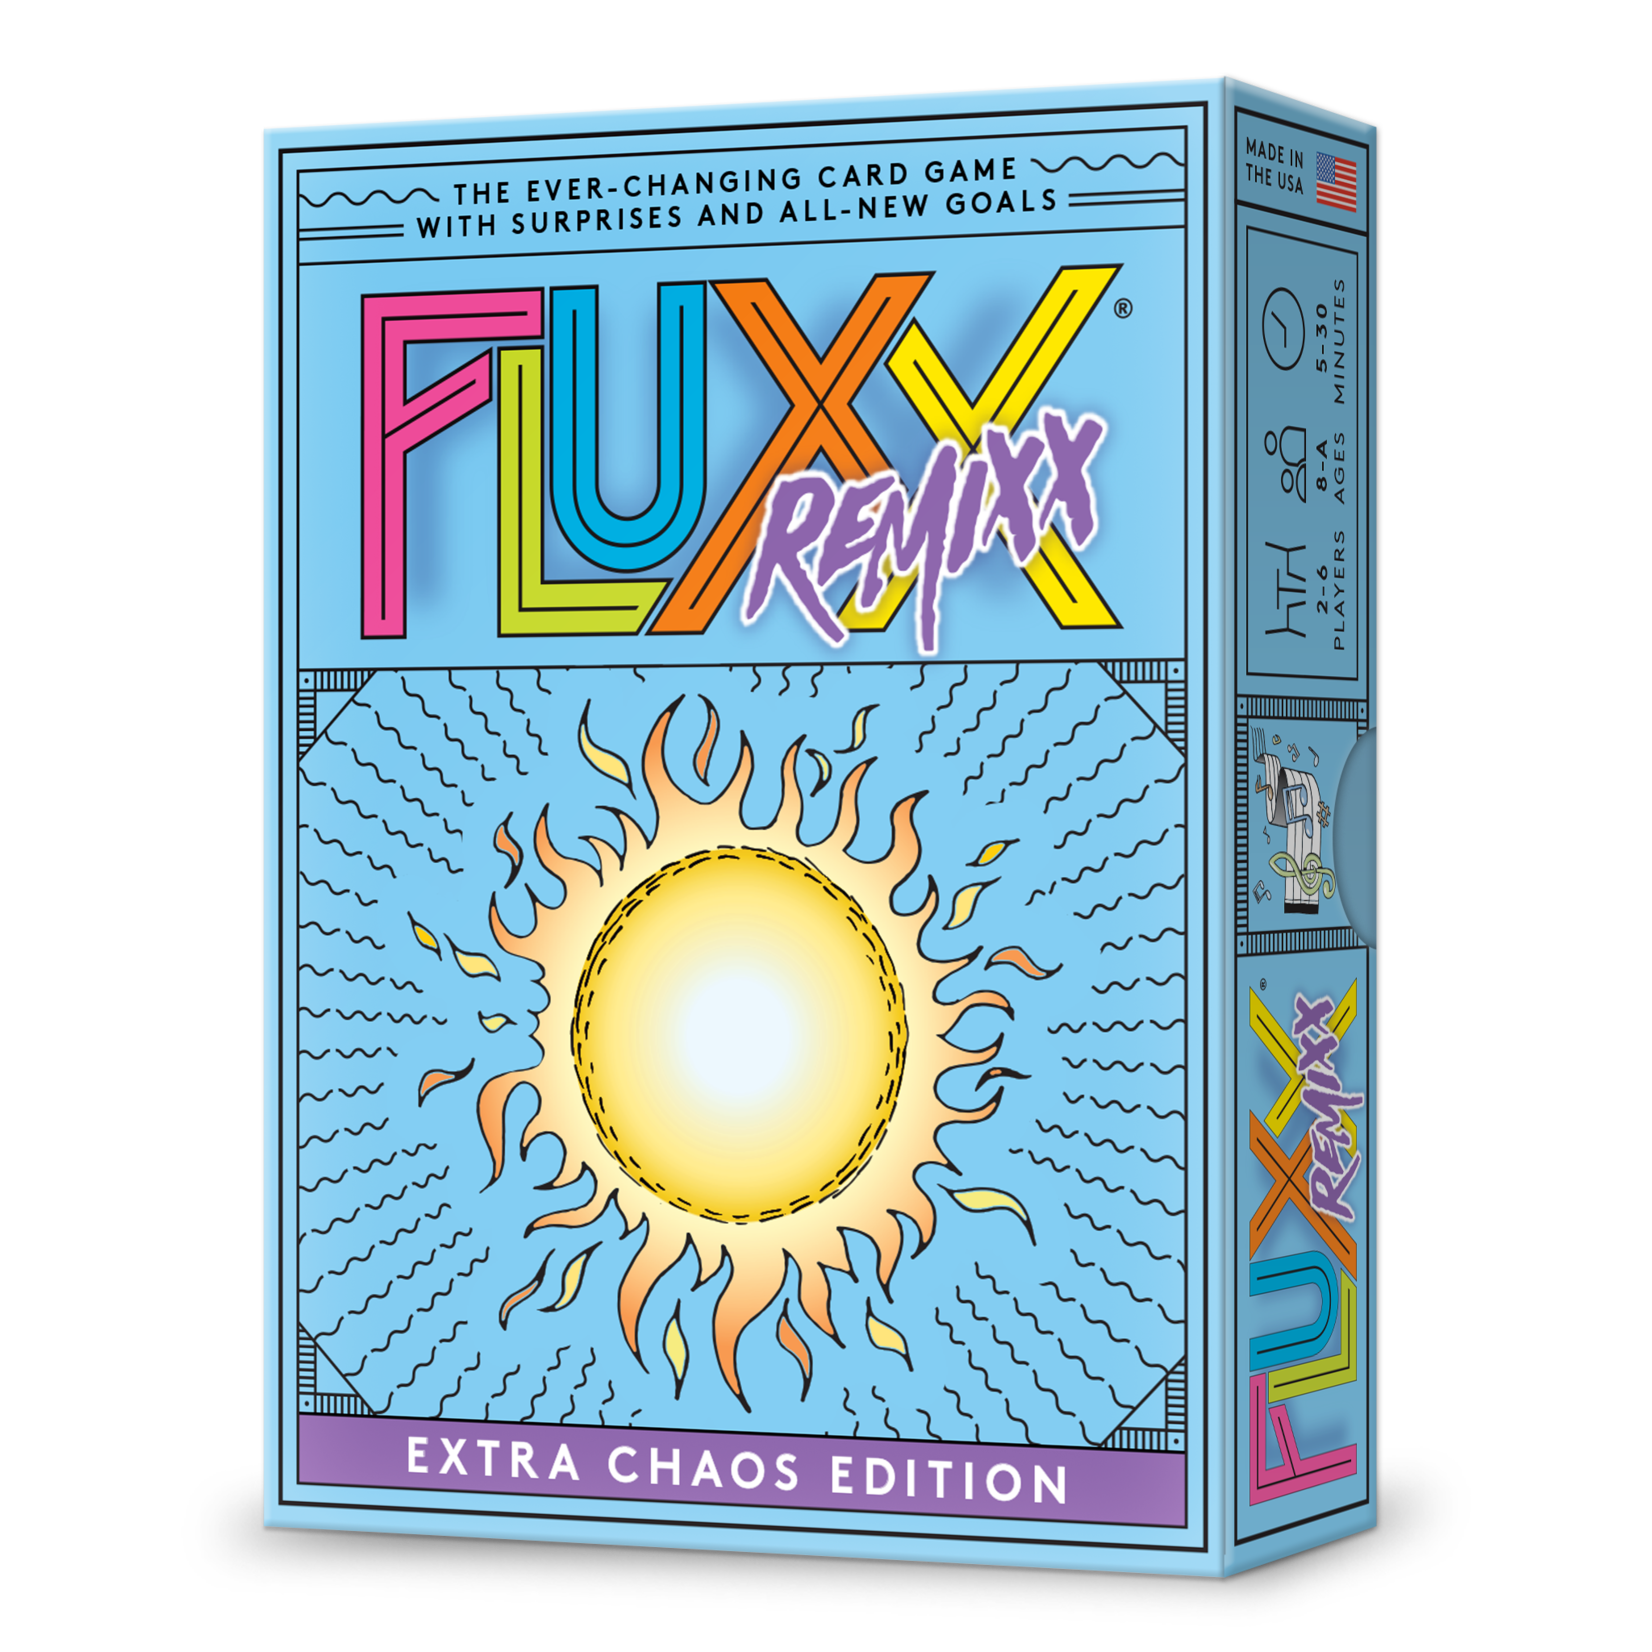 Fluxx: Fluxx Remixx